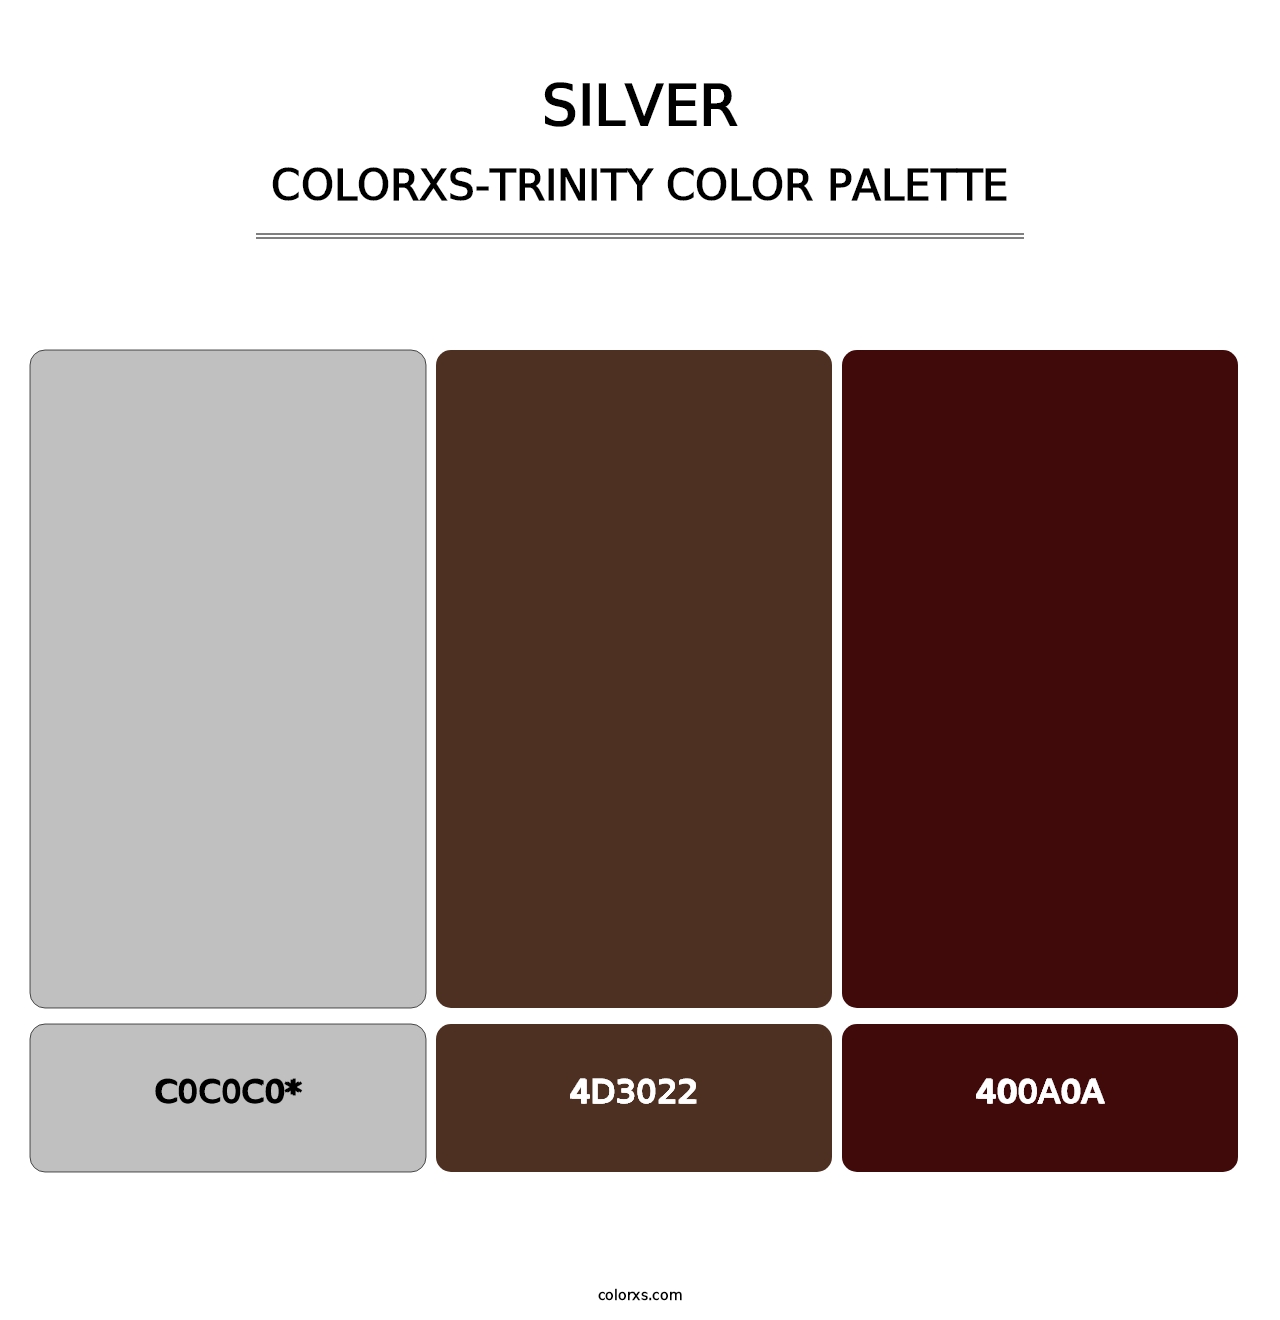 Silver - Colorxs Trinity Palette